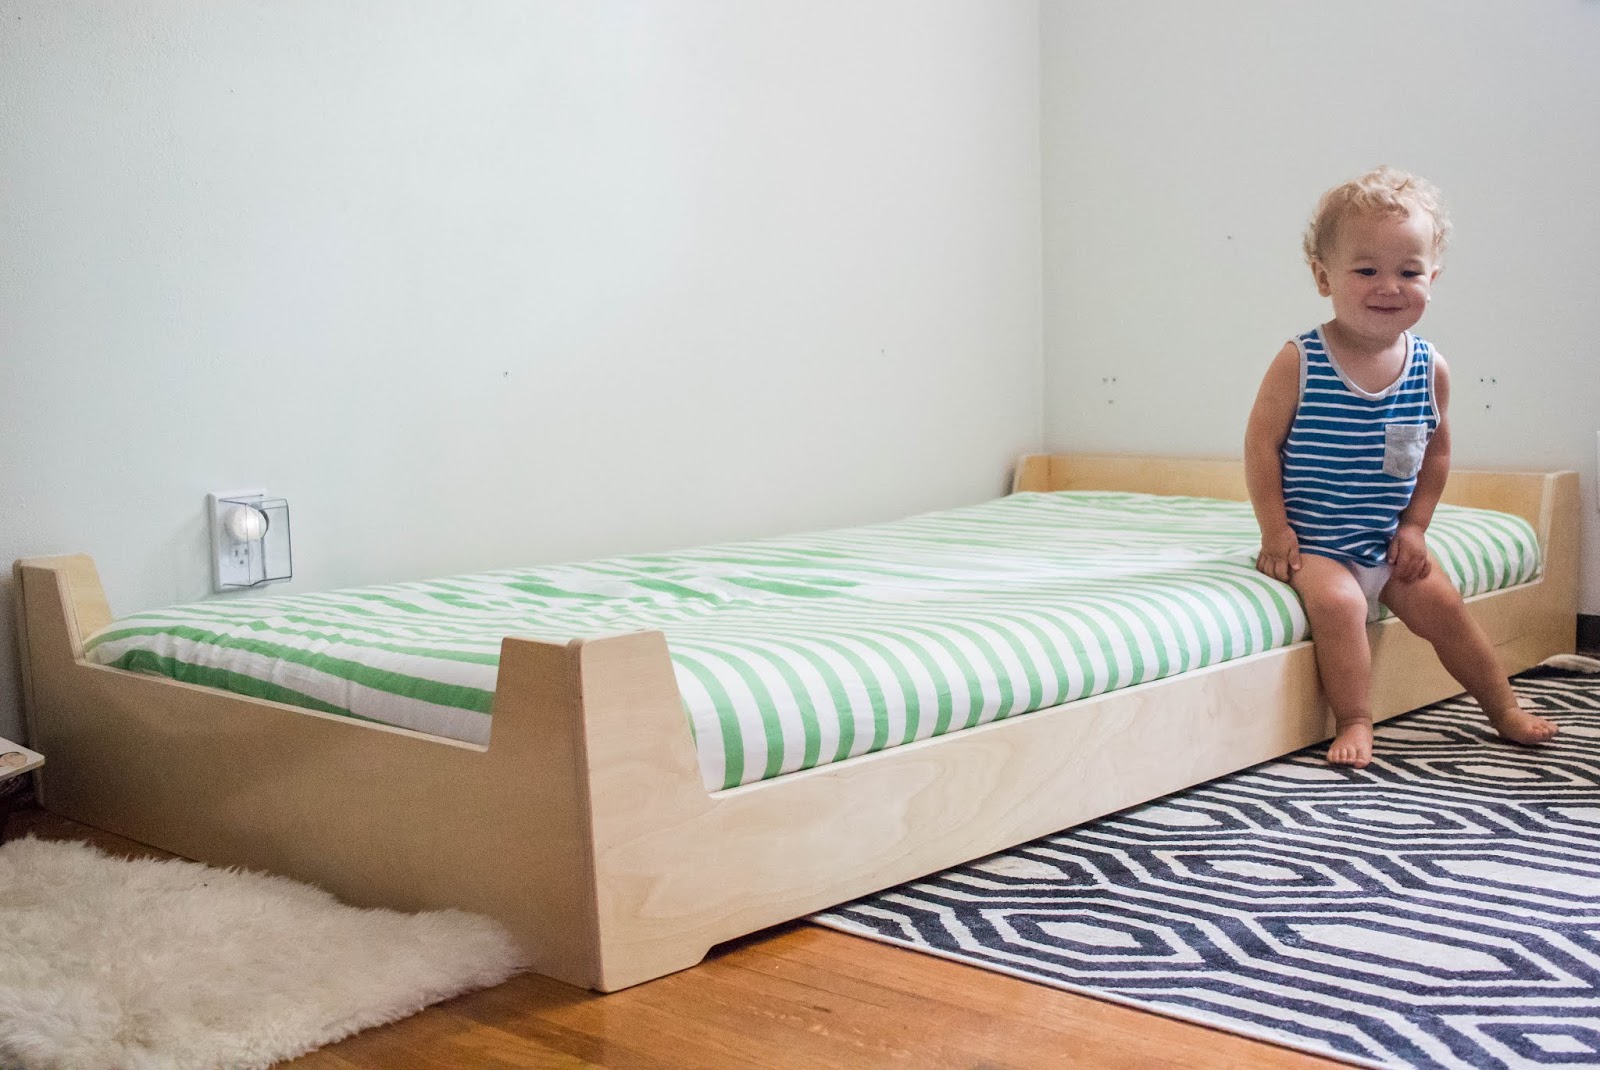 montessori bed mattress size